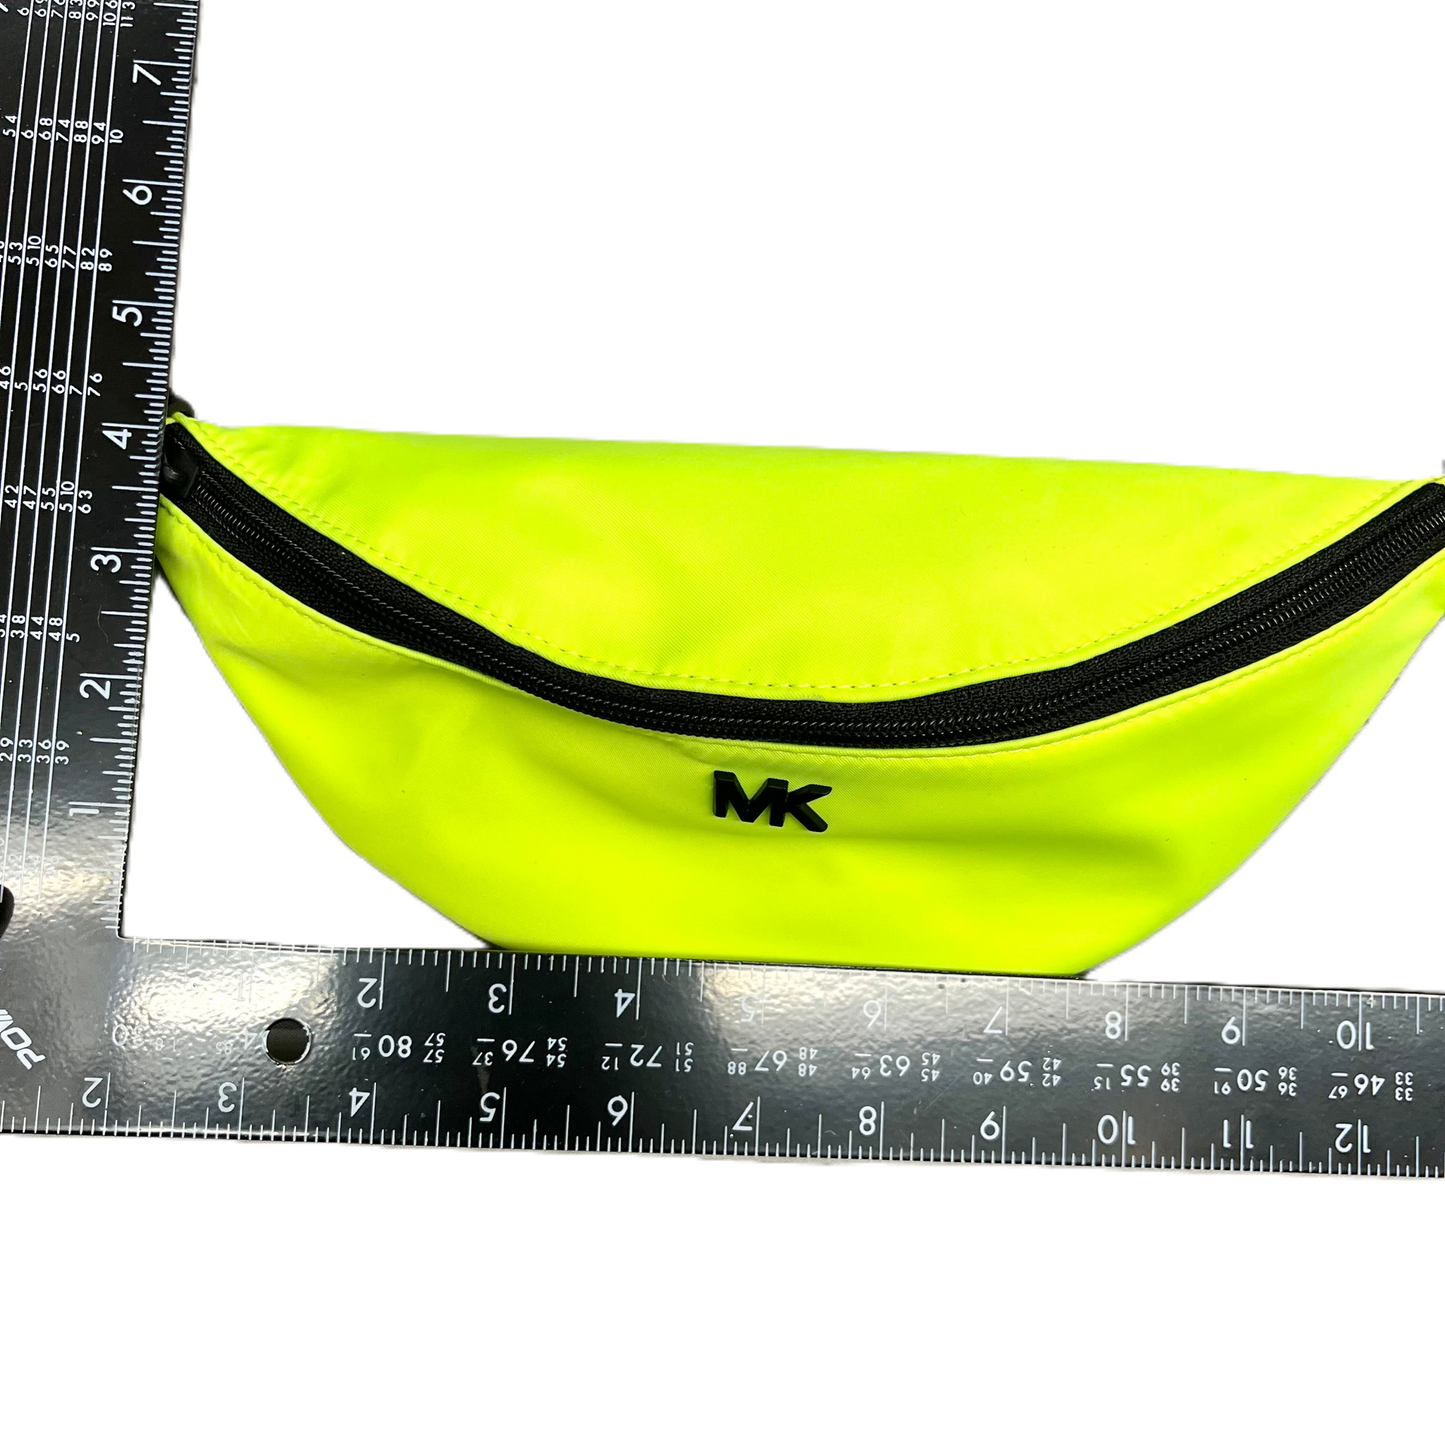 Belt Bag Designer By Michael Kors, Size: Medium